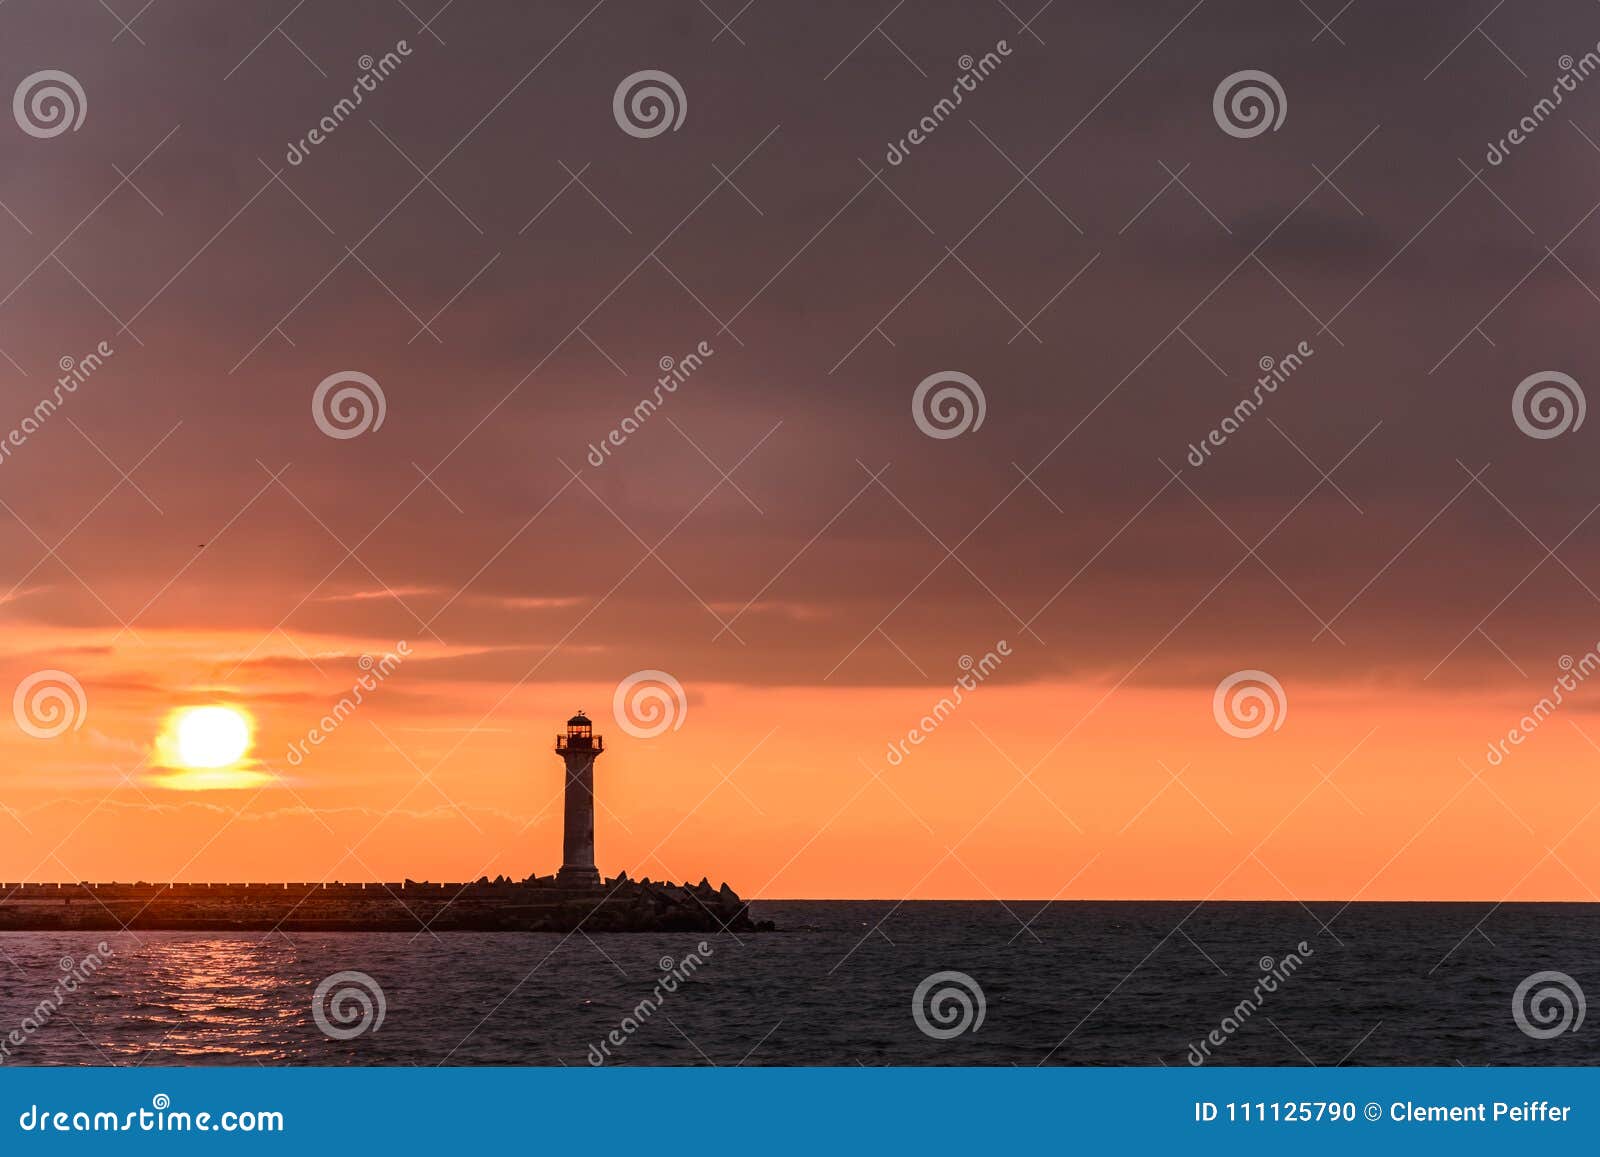 Seascape of a Lighthouse at Sunrise Against a Vibrant Orange Sky Stock ...